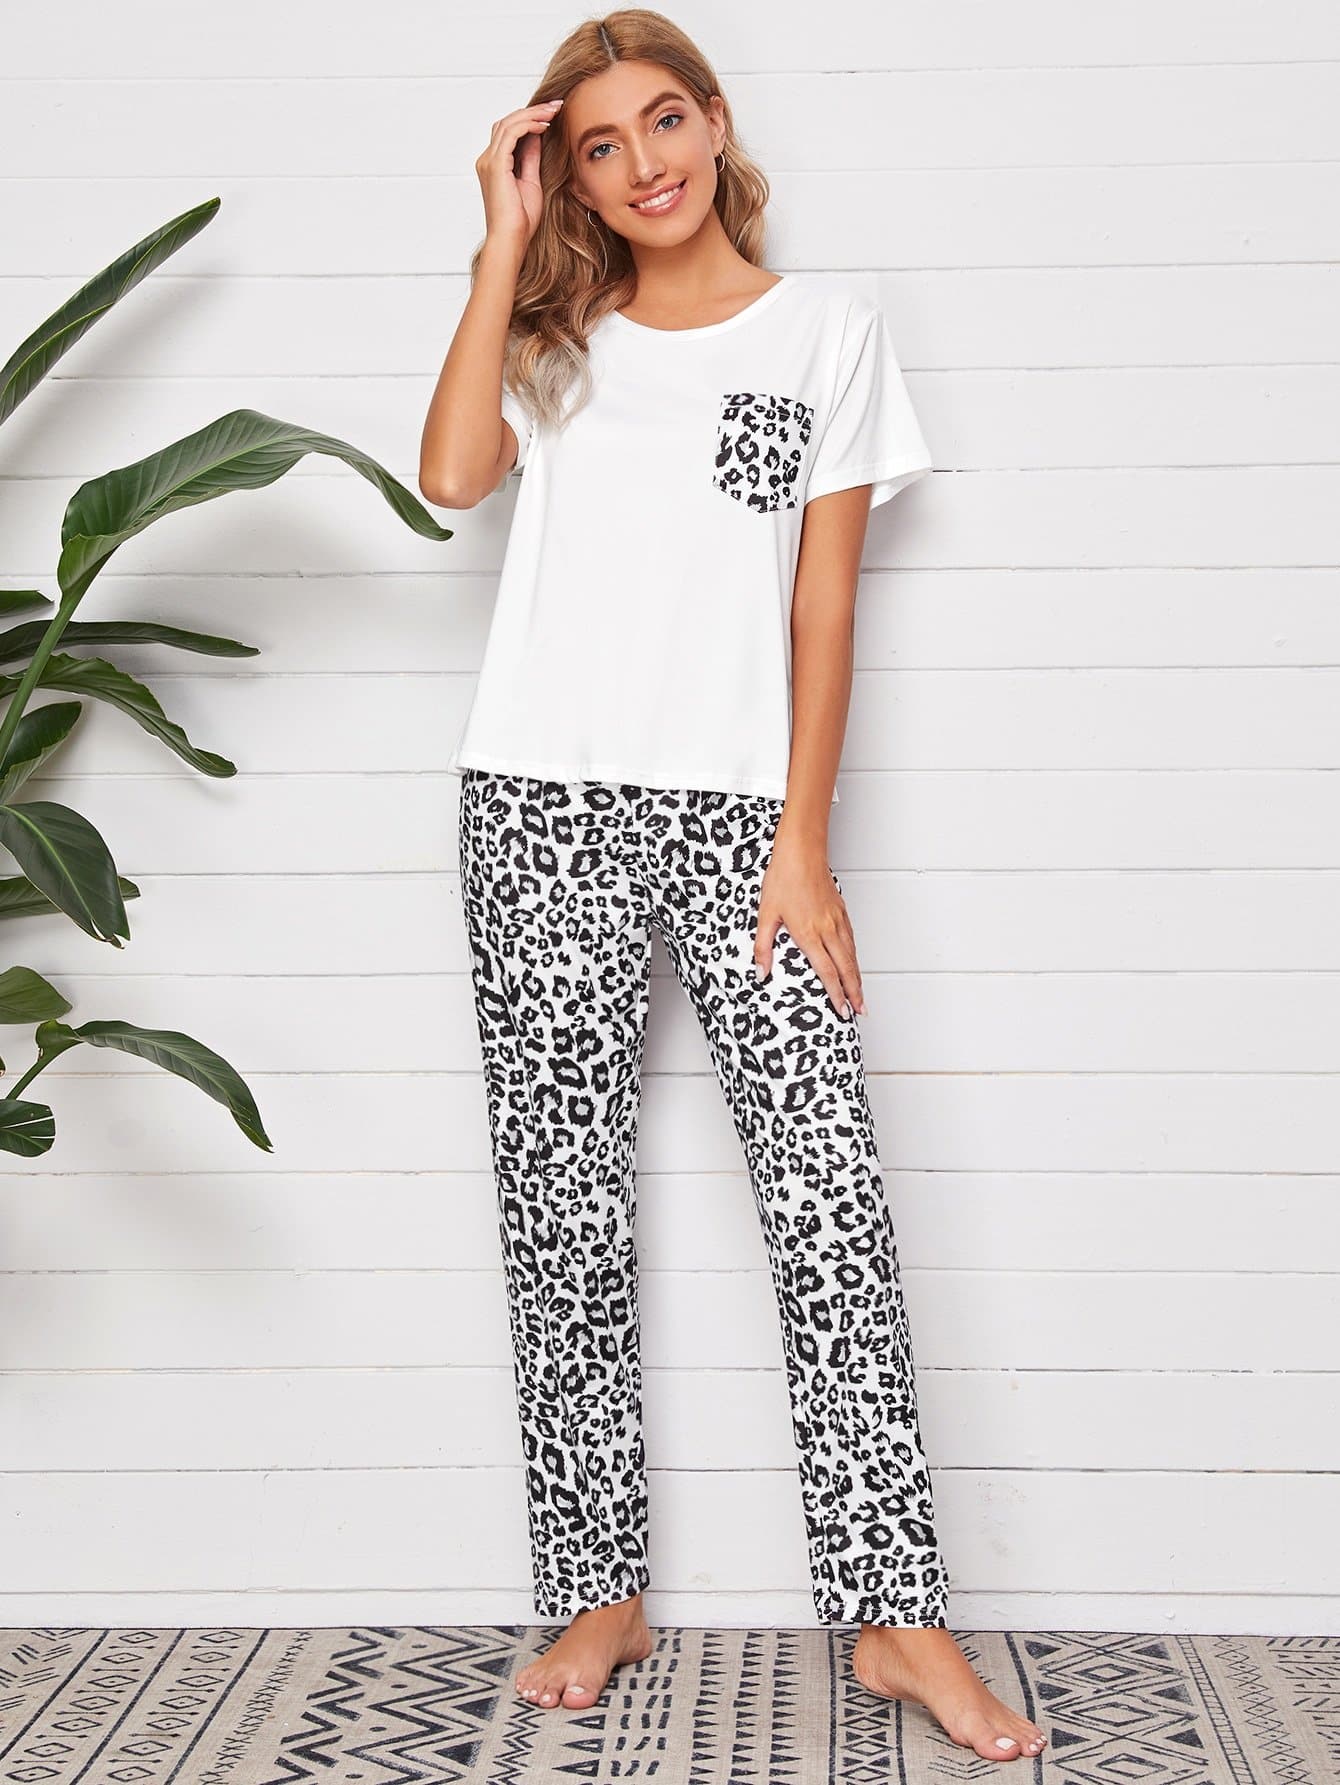 Short Sleeve Leopard Print Pocket Front Pyjama Sleepwear Set